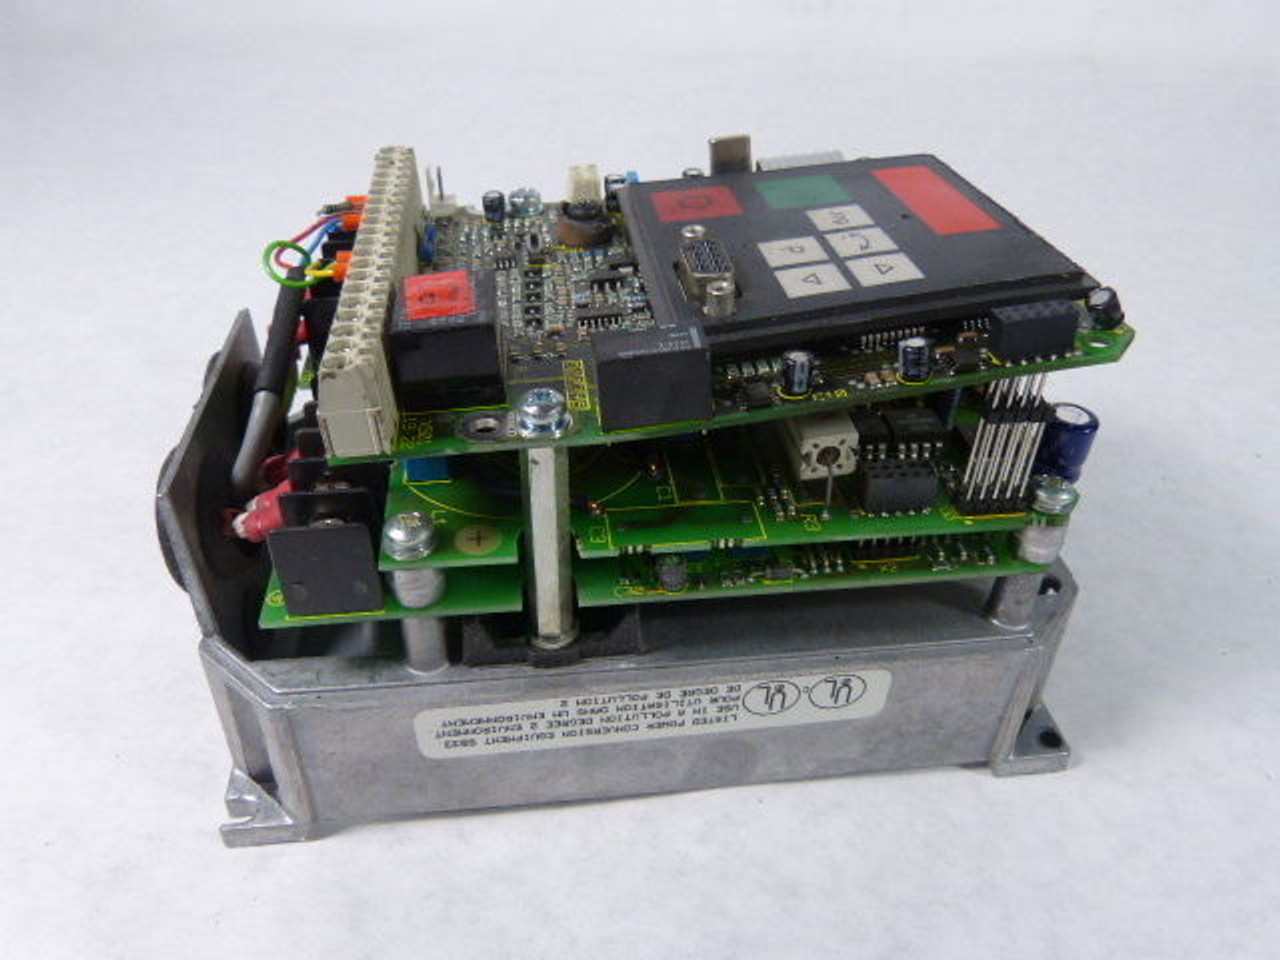 Siemens 6SE3-112-1CA40 6SE3112-1CA40 MicroMaster Drive 230V 3Ph 370W ! AS IS !